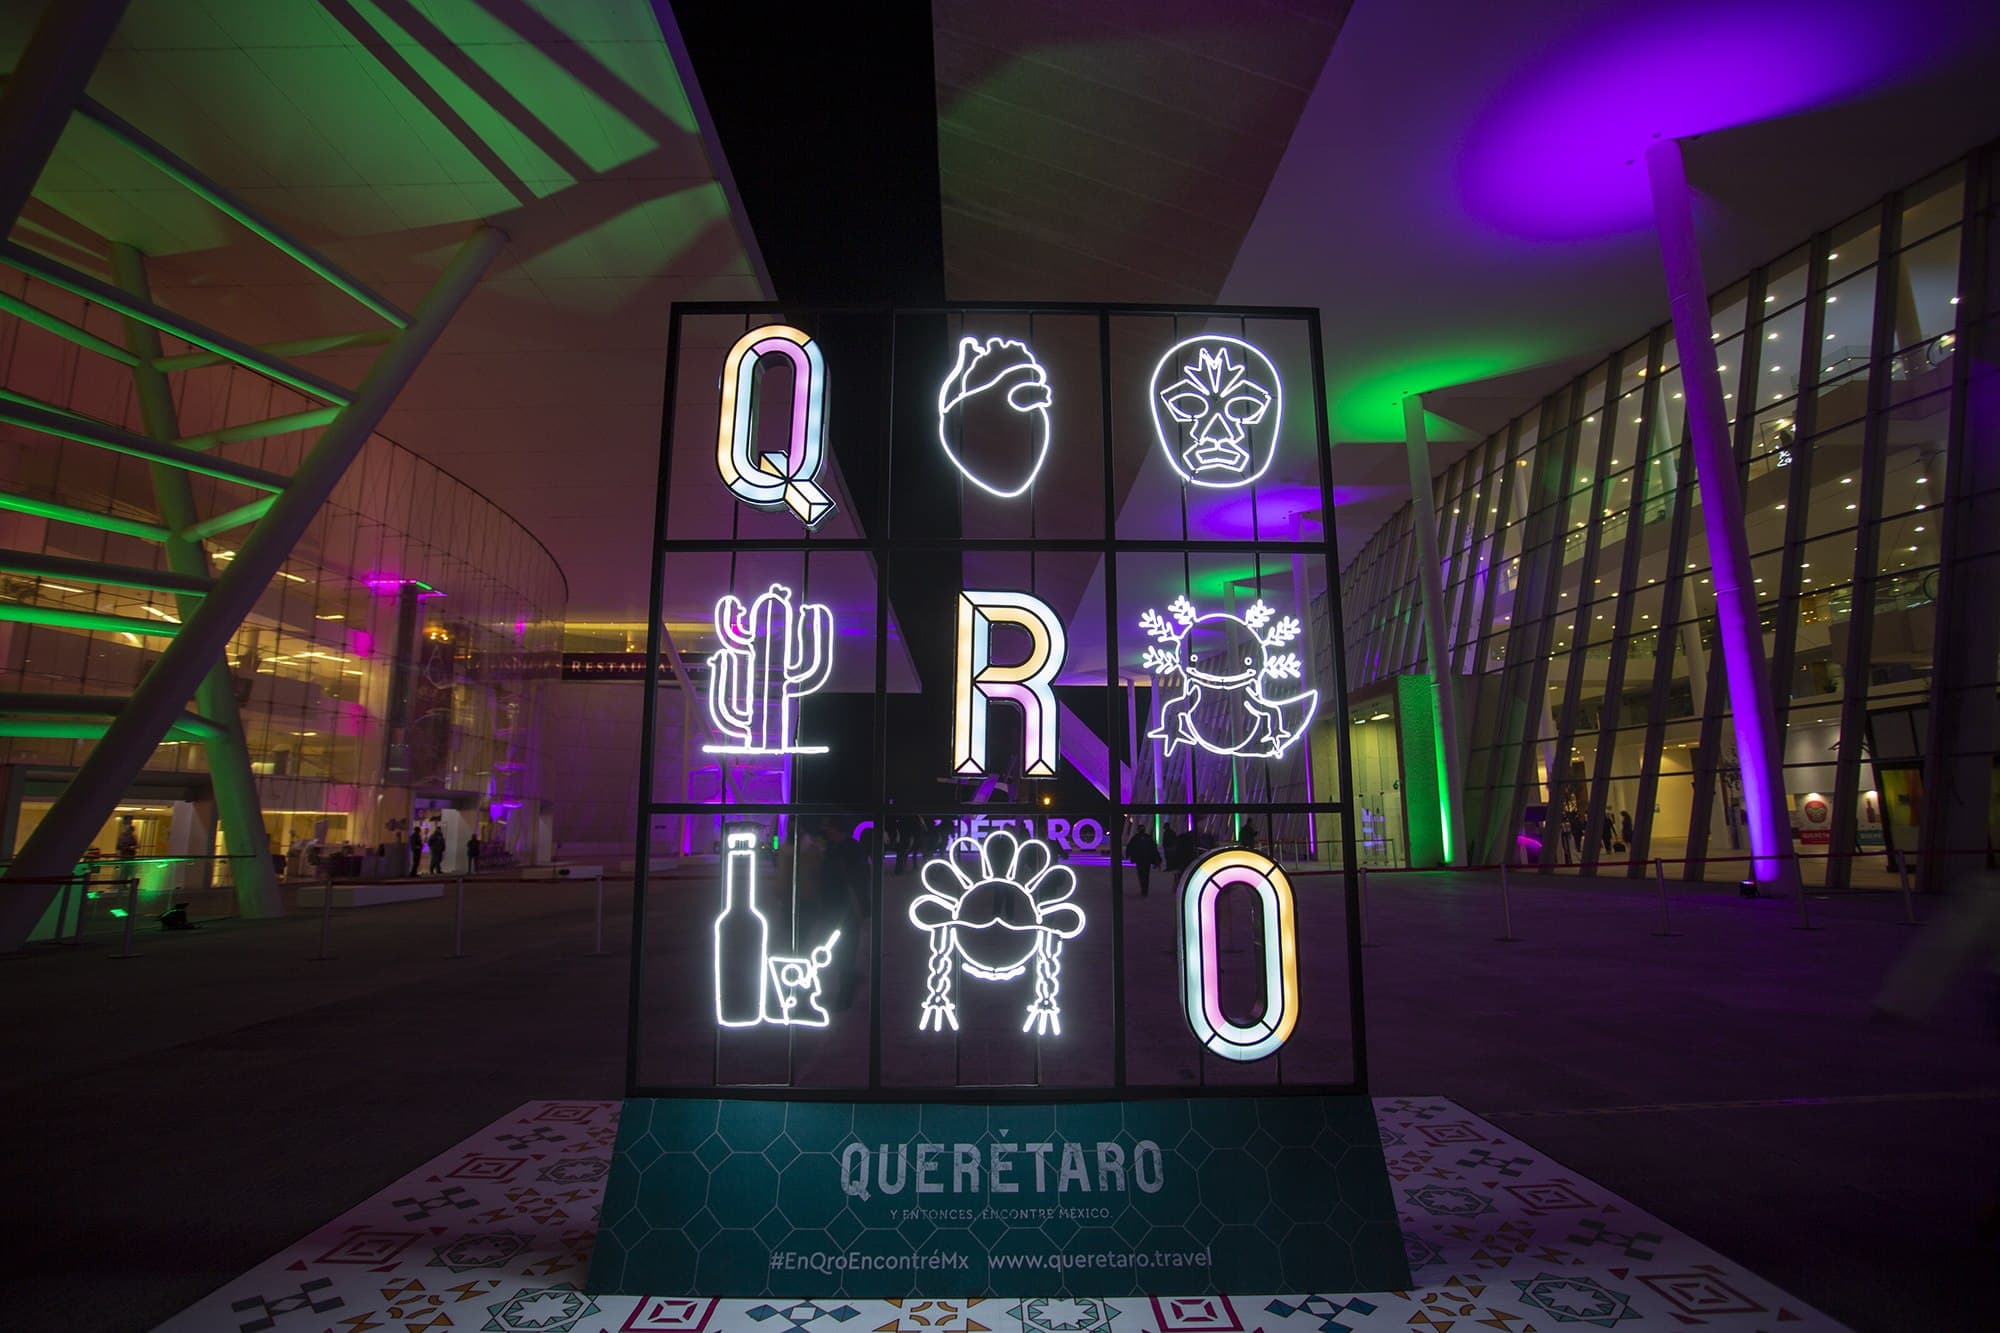 Querétaro, ganador de la mejor marca-destino de Latinoamérica